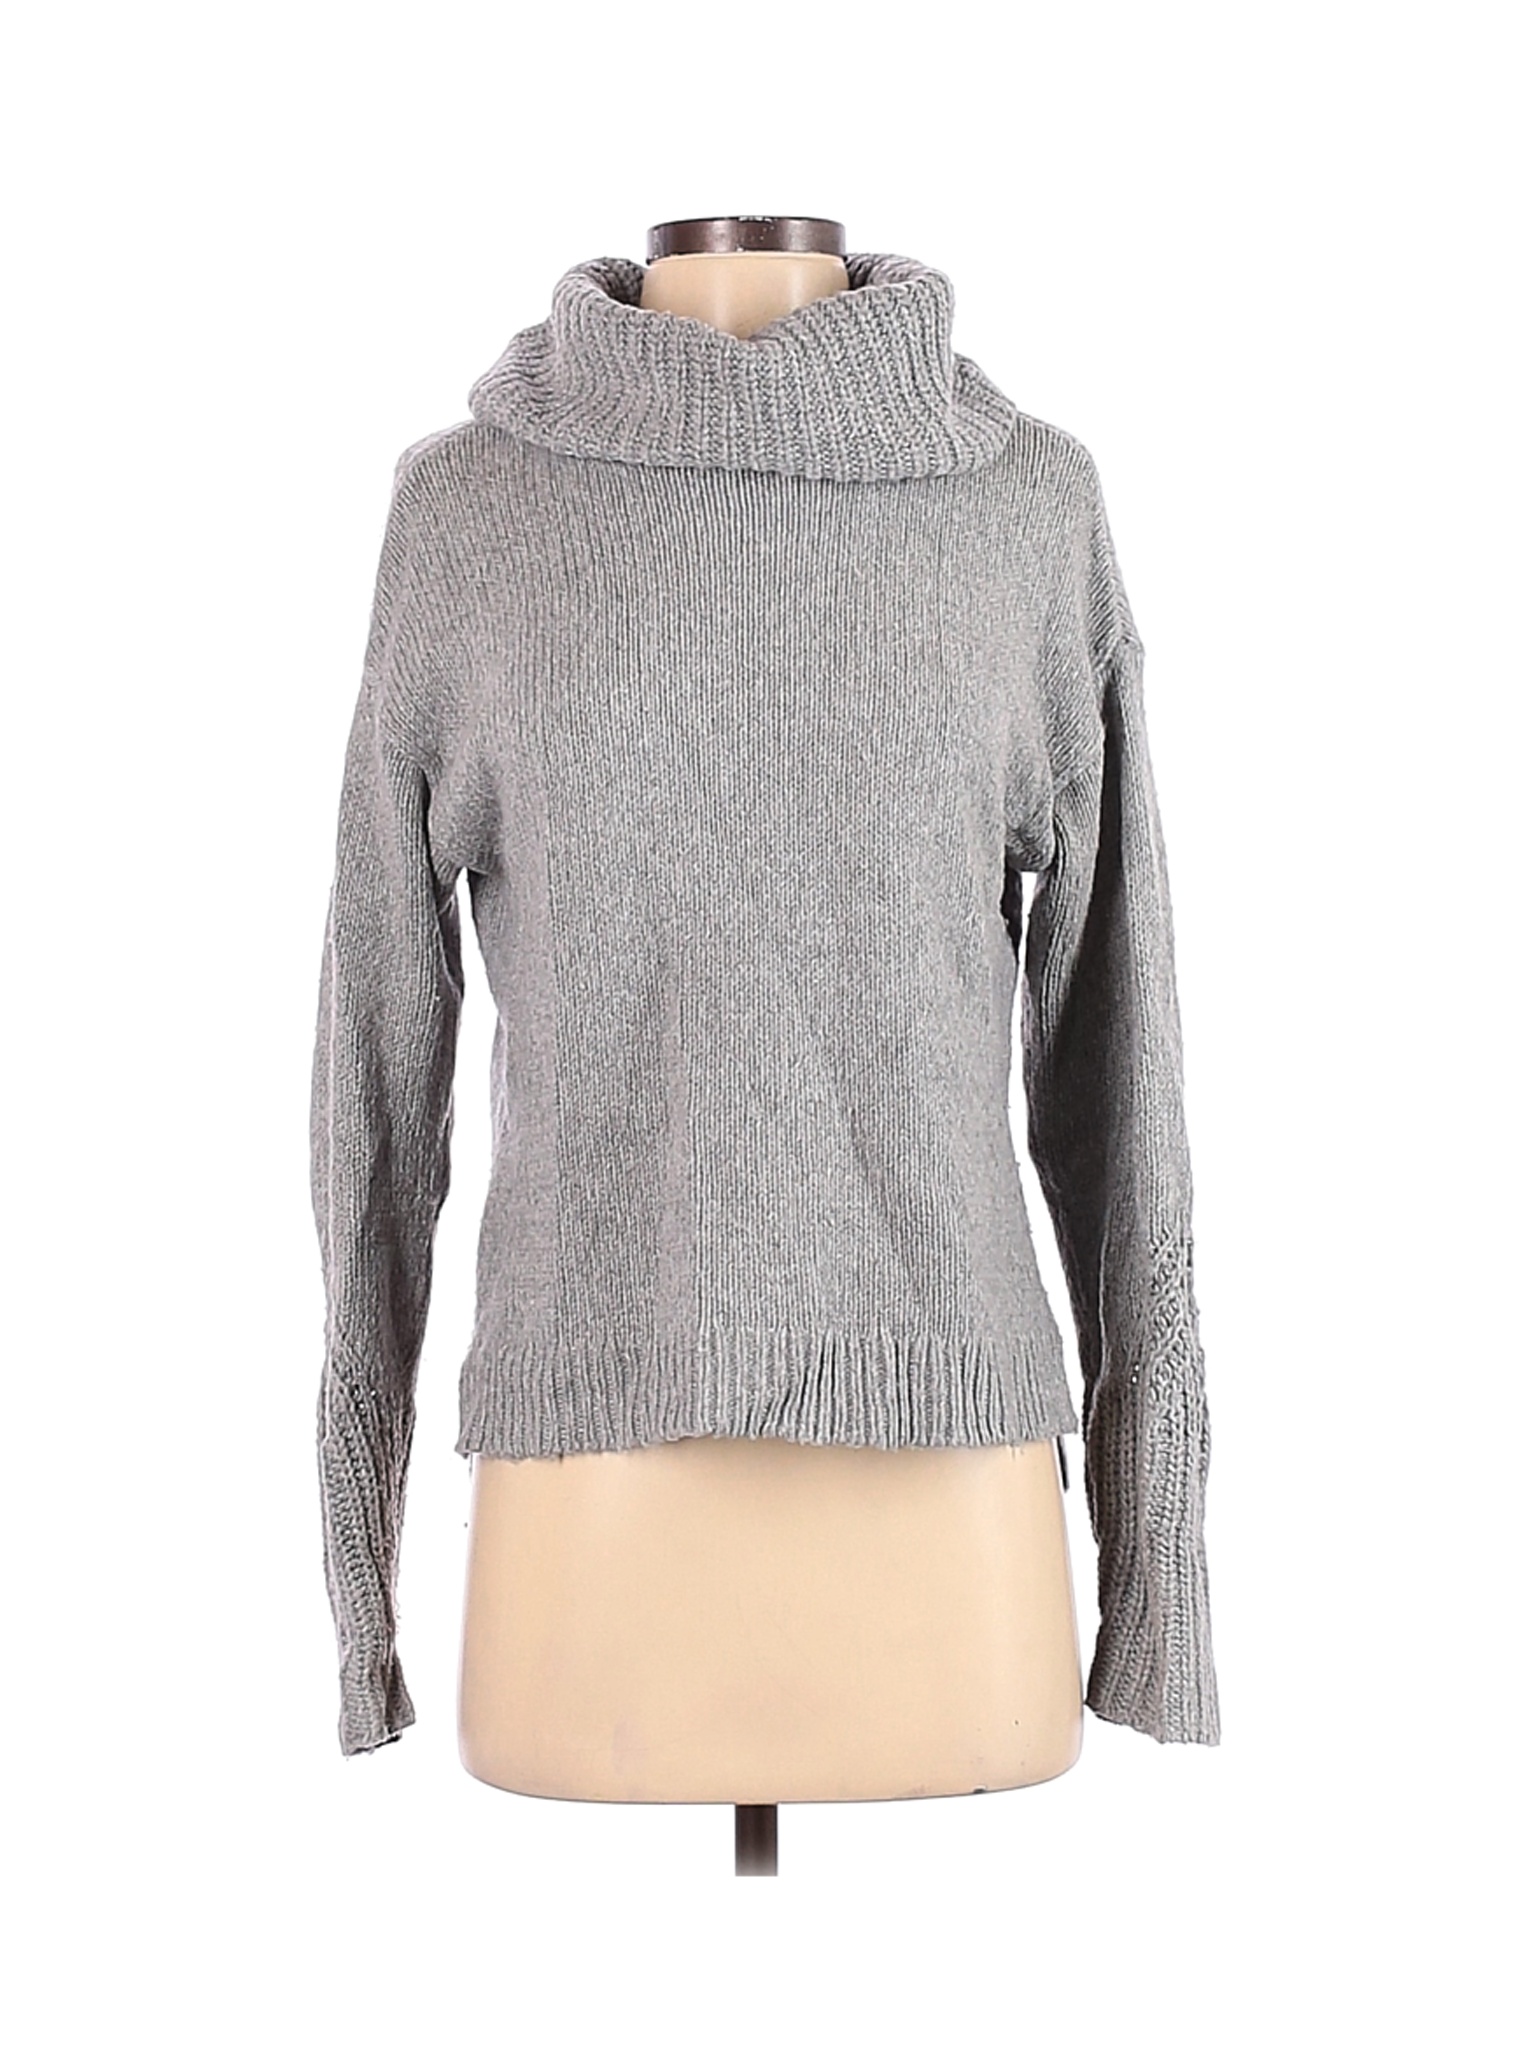 White House Black Market Women Gray Turtleneck Sweater S | eBay